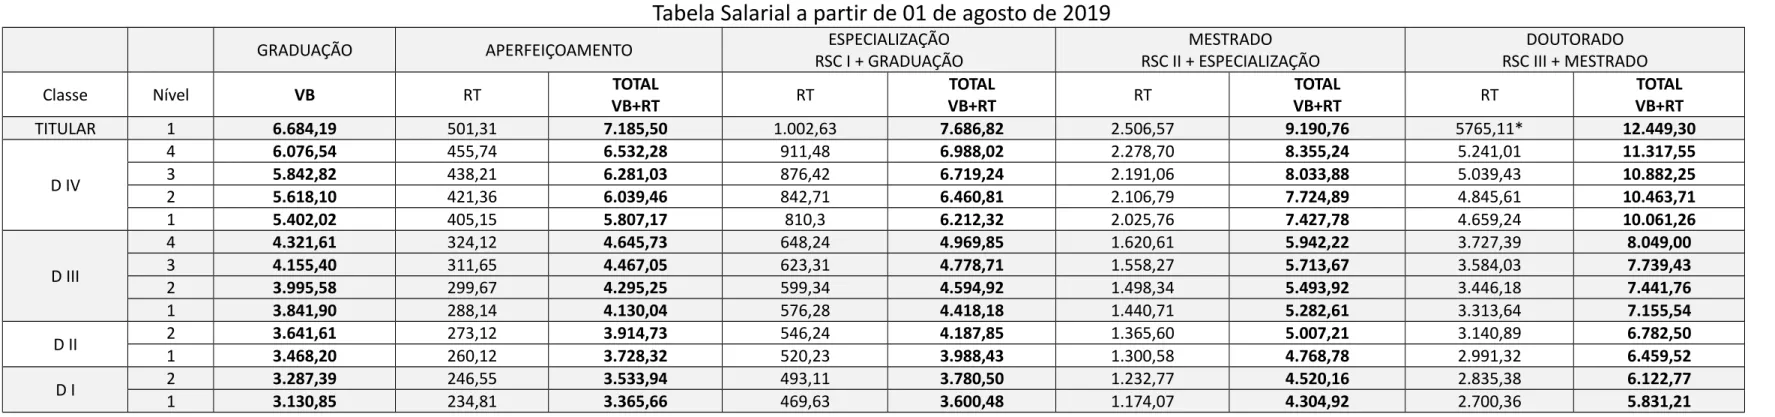 Tabela Salarial a partir de 01 de agosto de 2019